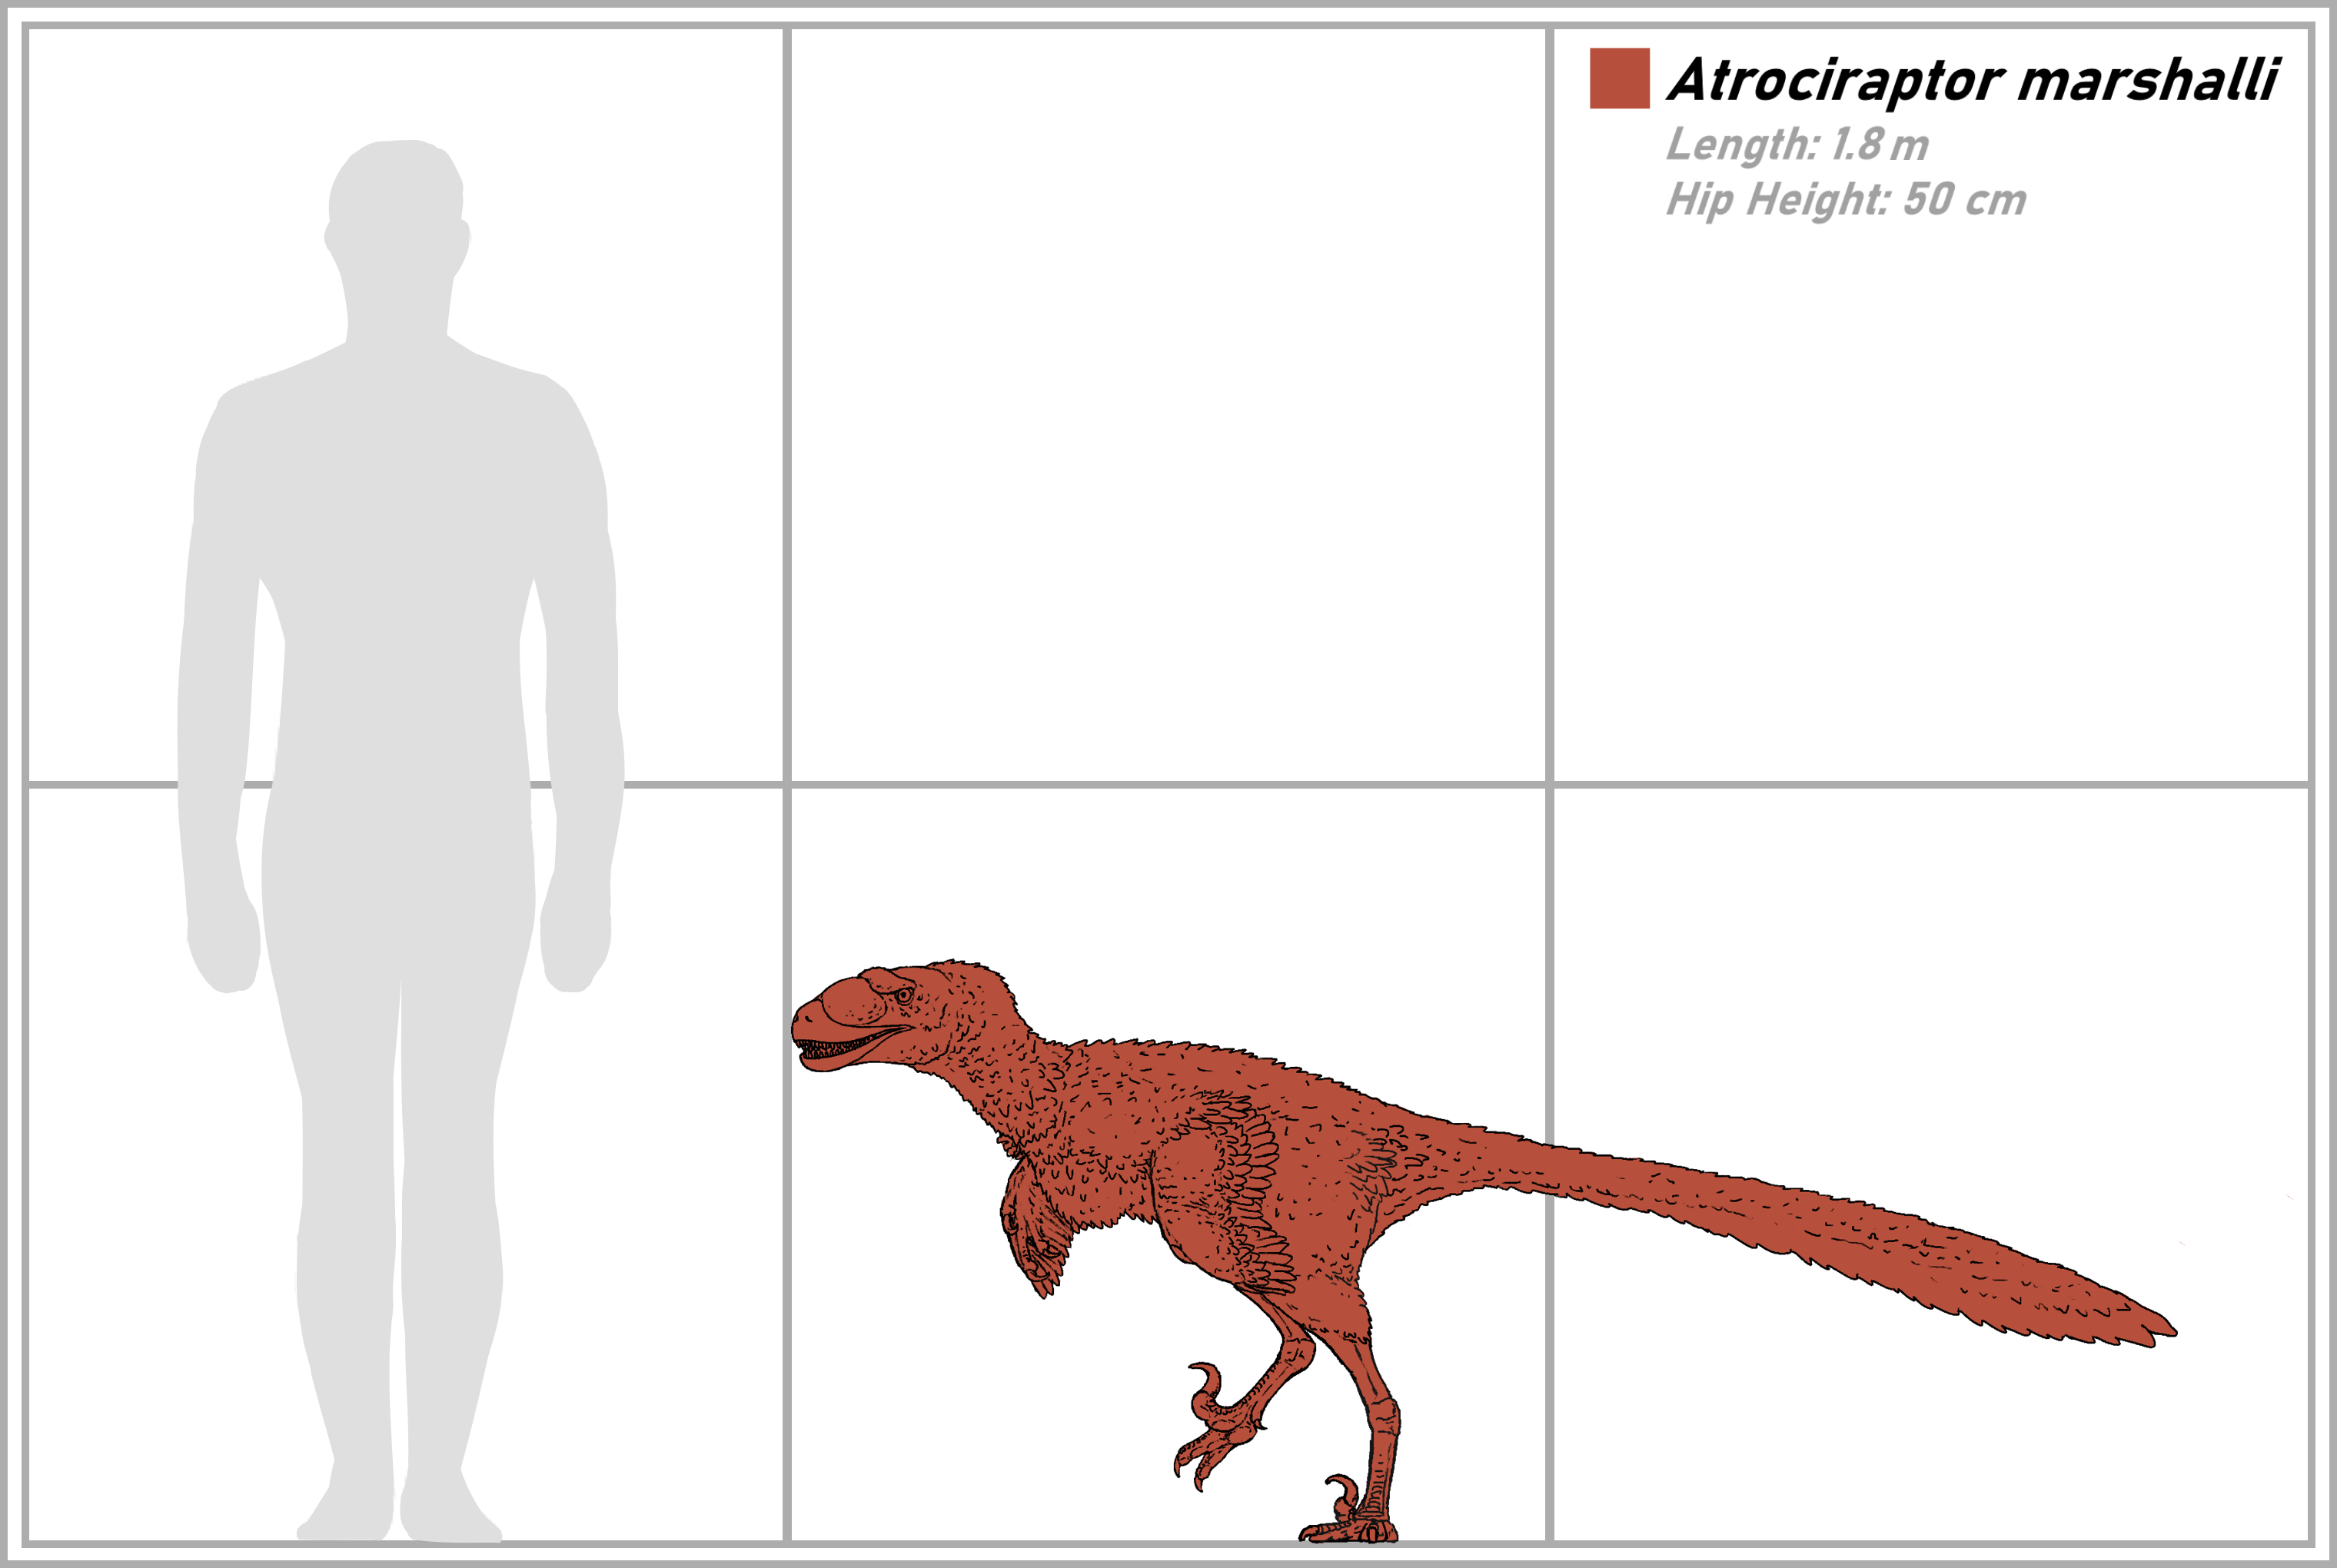 Atrociraptor_size.png